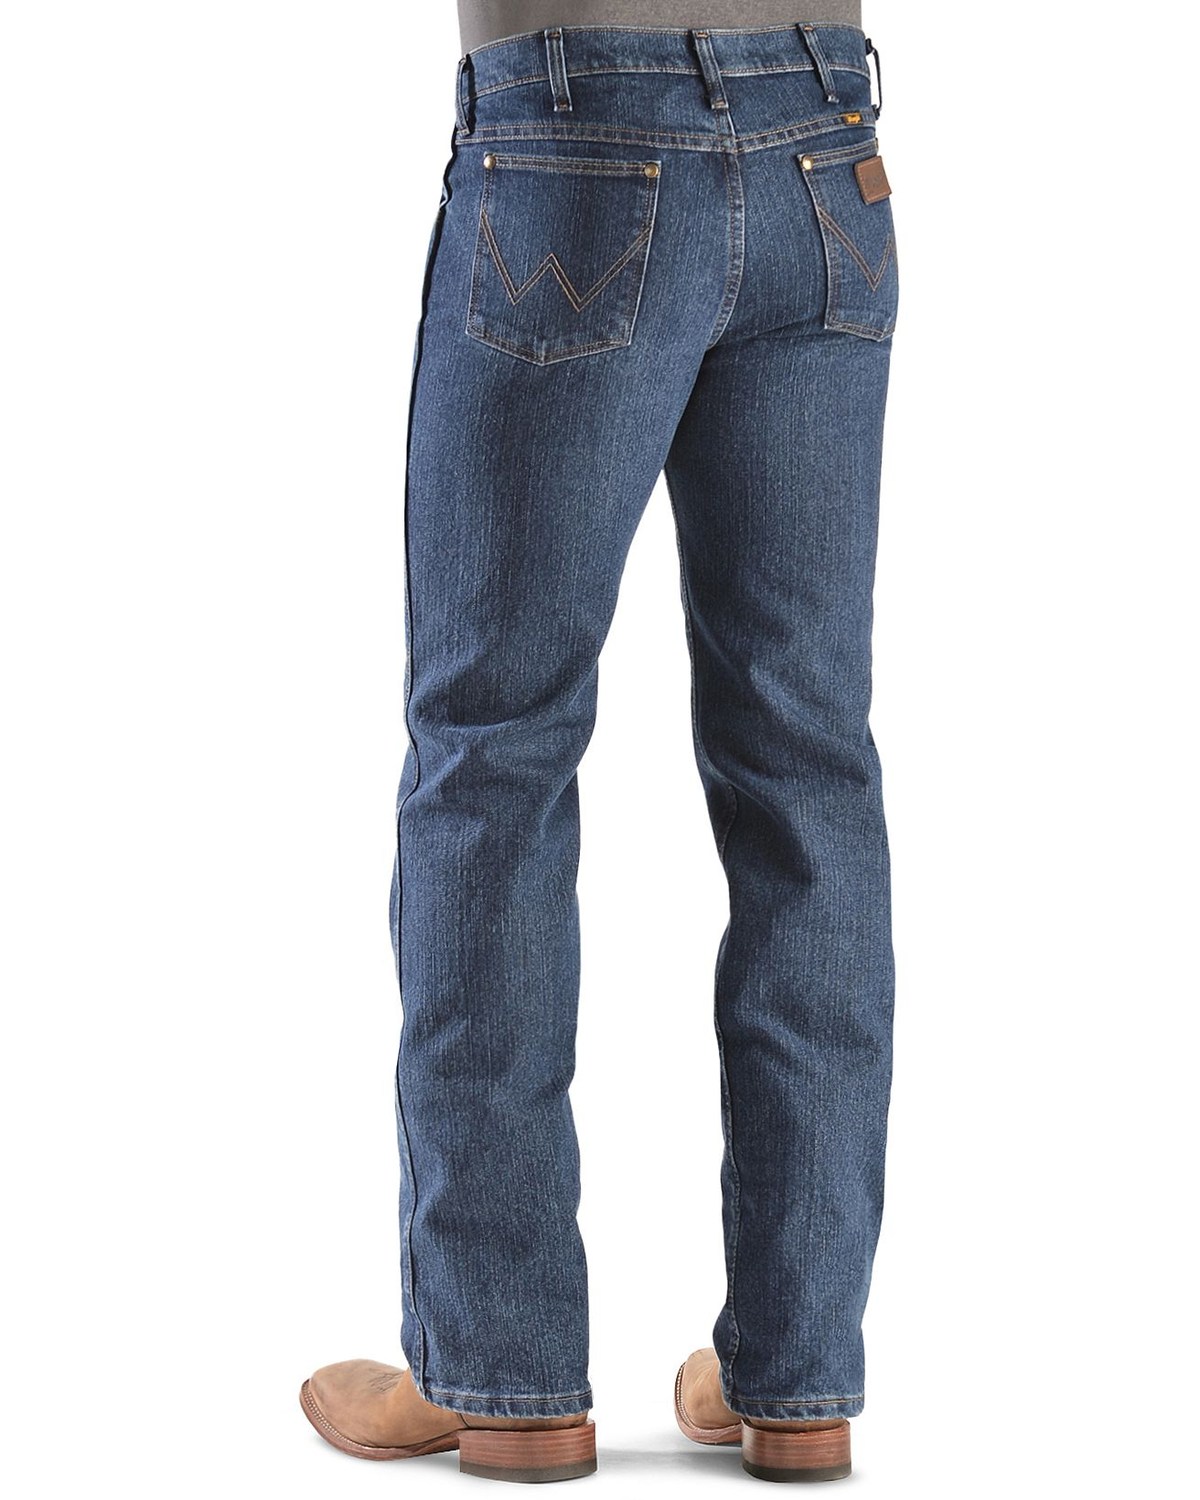 Wrangler Advanced Comfort Slim Fit Jeans - Reg